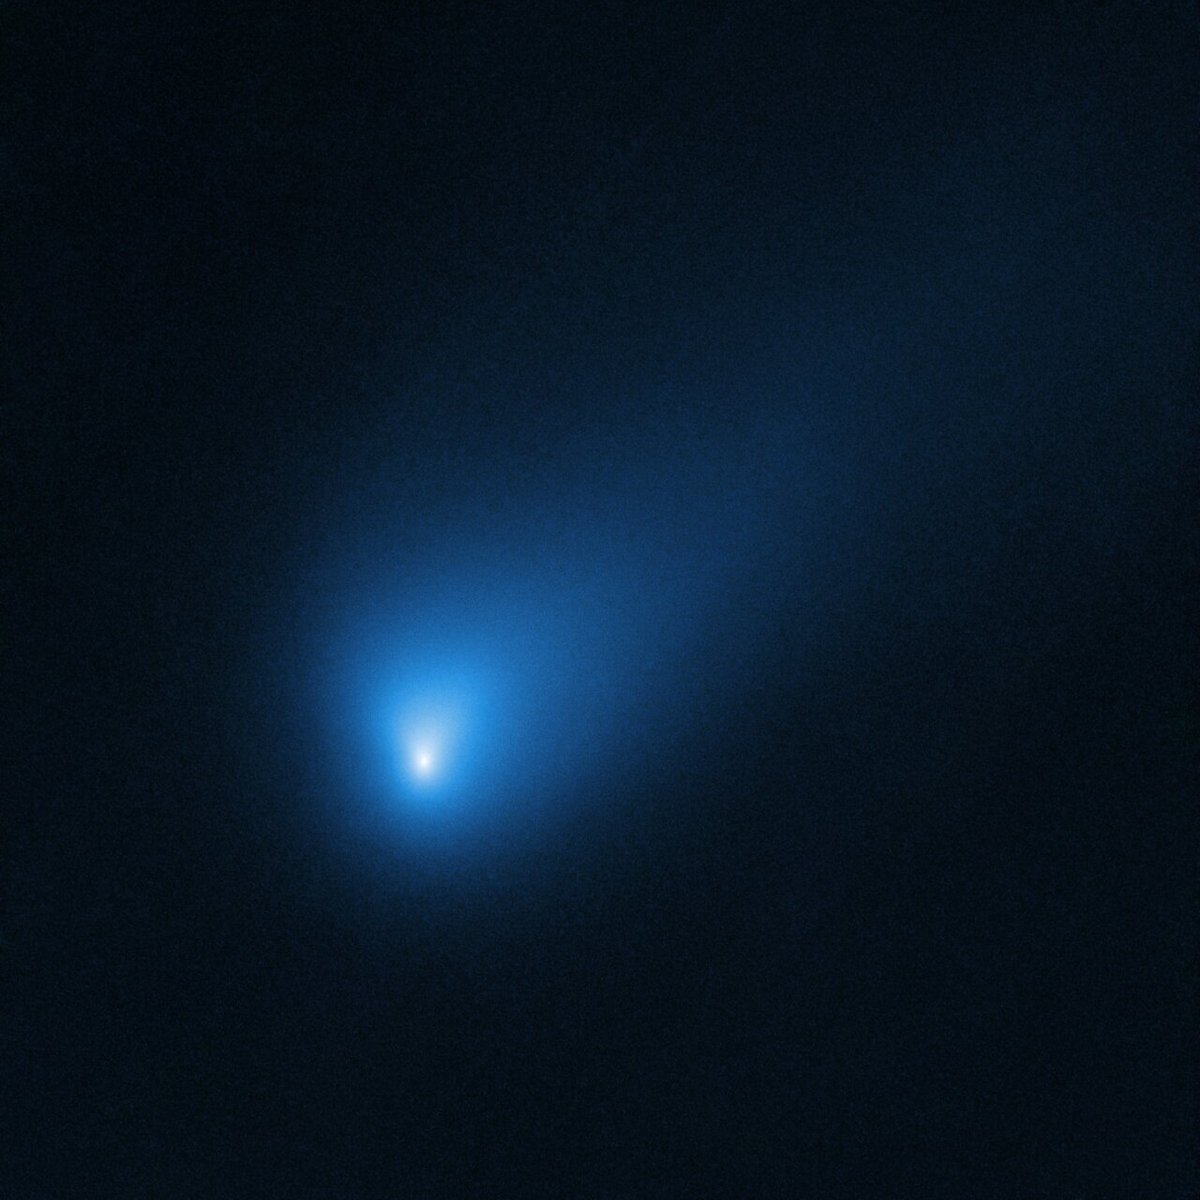 2i/Borisov Hubble © NASA, ESA, D. Jewitt (UCLA)